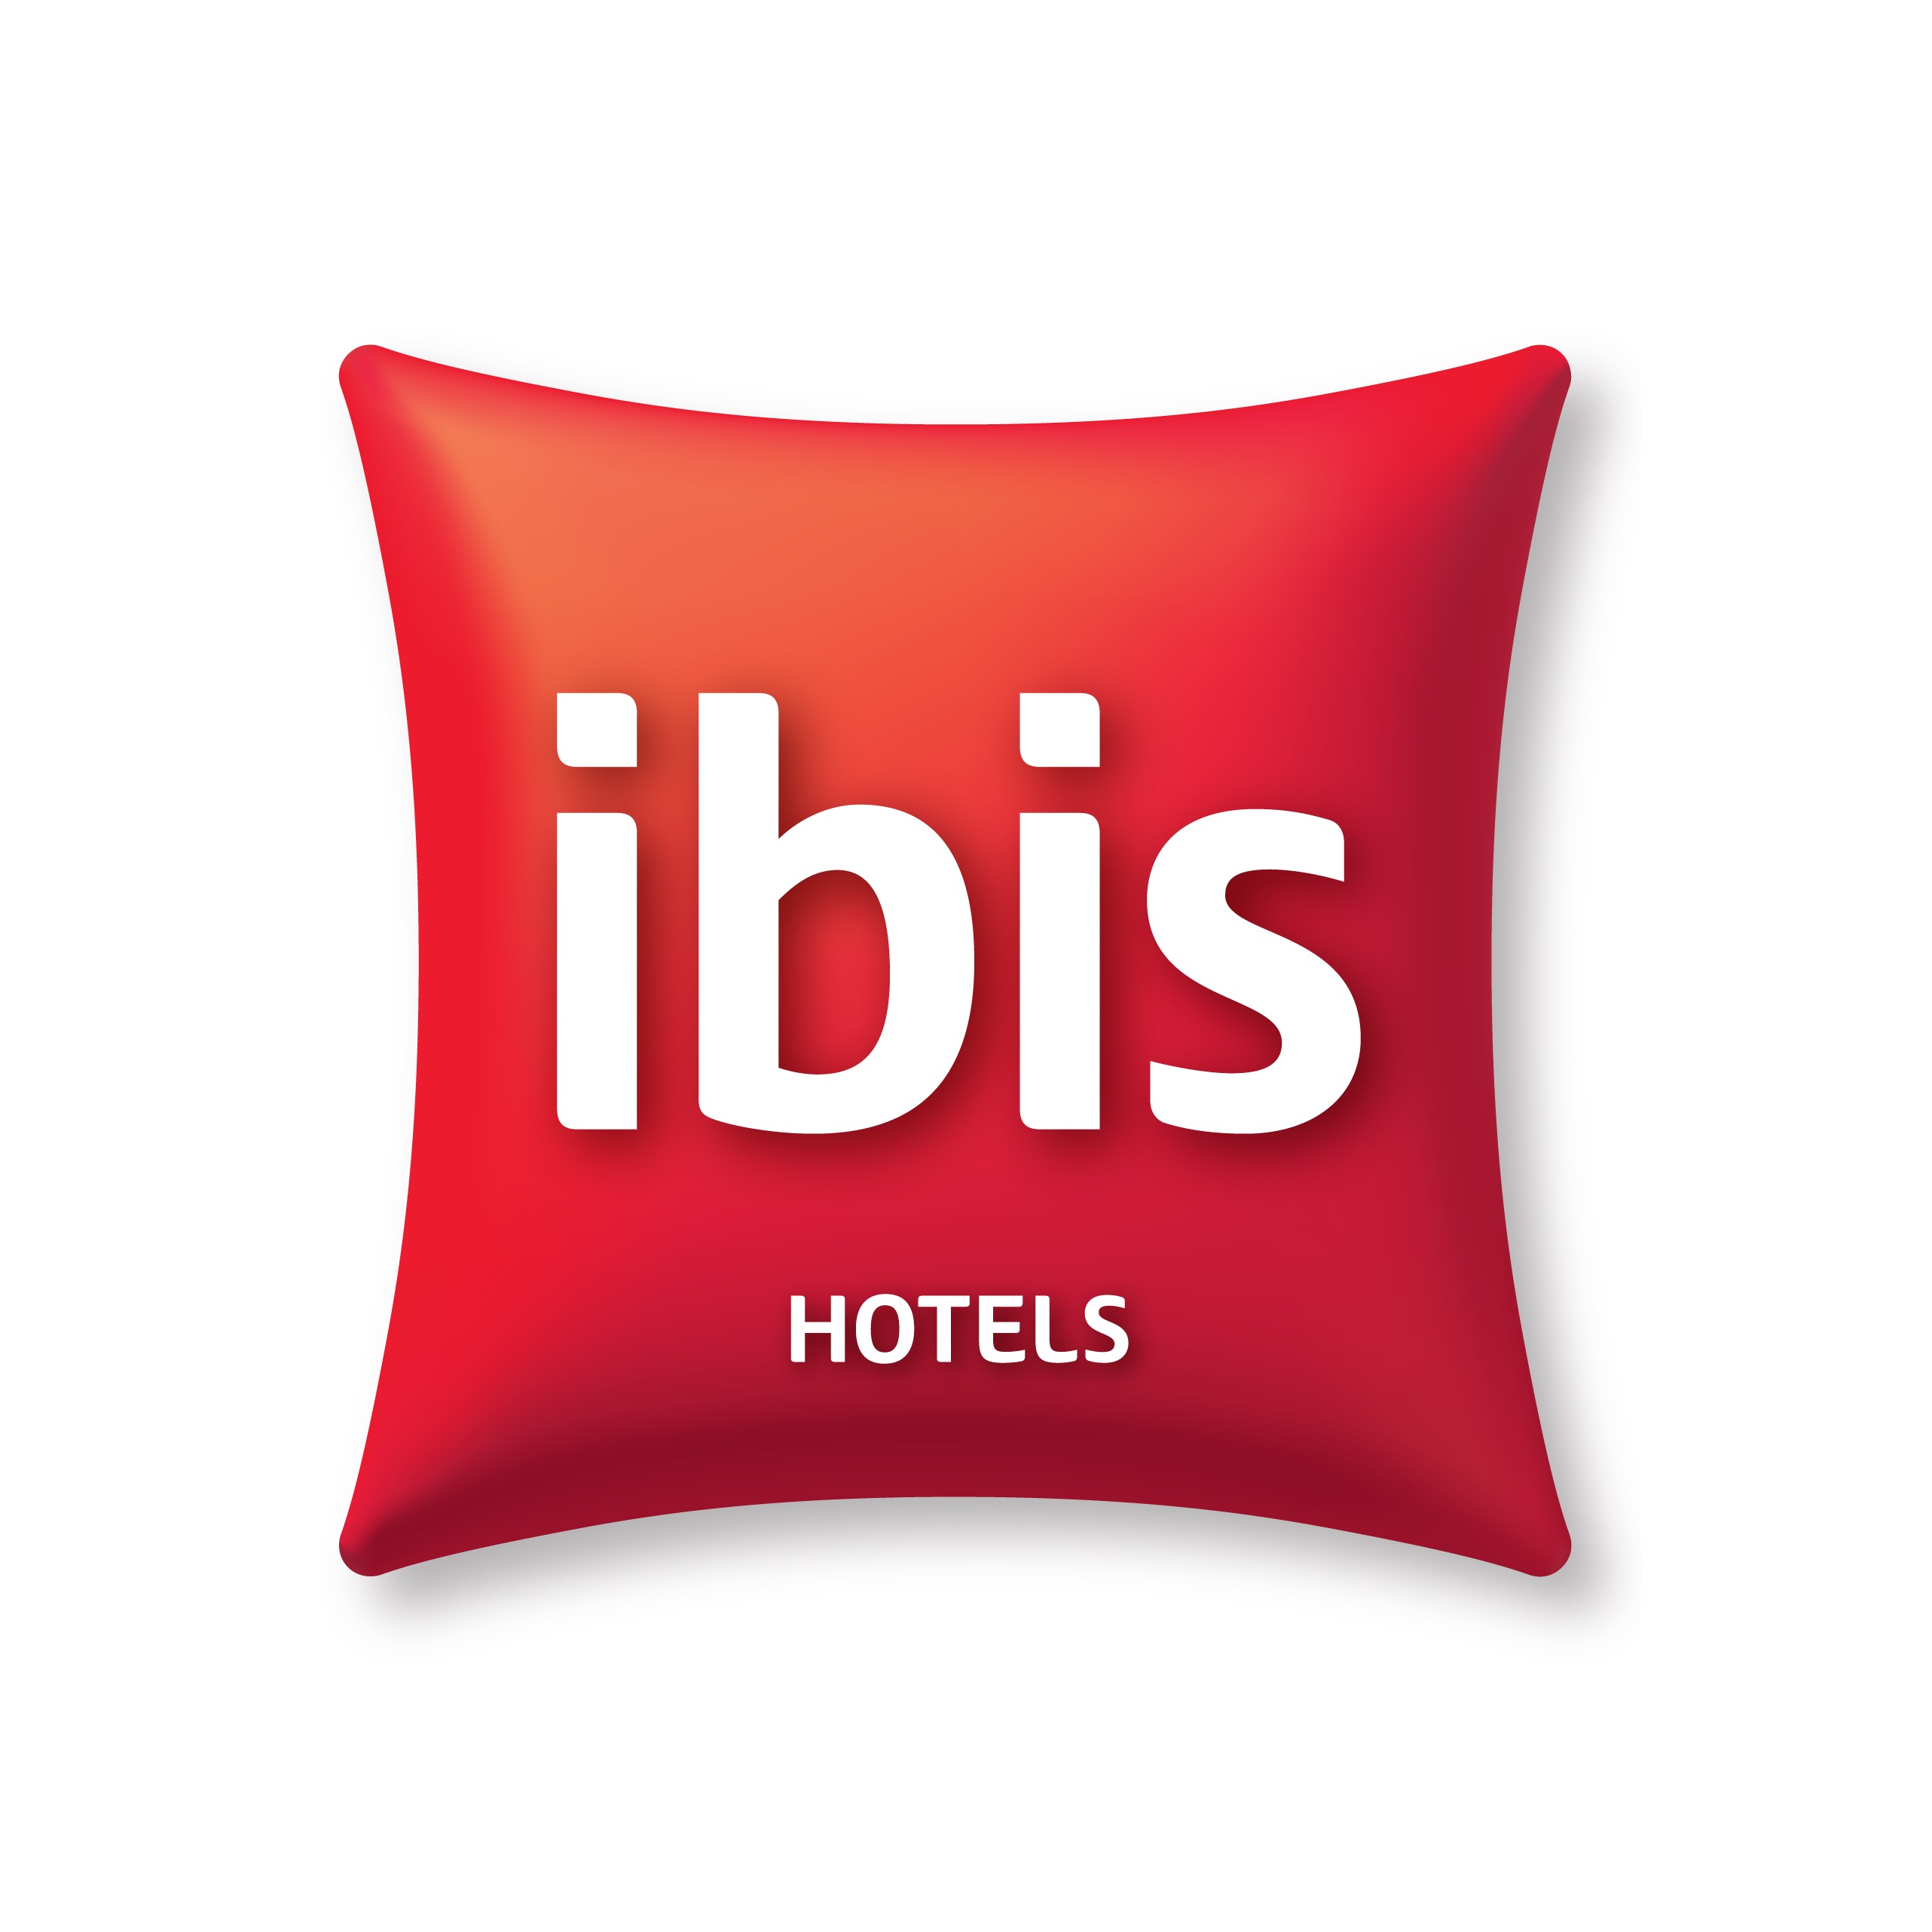 Ibis Al Barsha (Budget Hotels) in Al Barsha | Get Contact Number ...